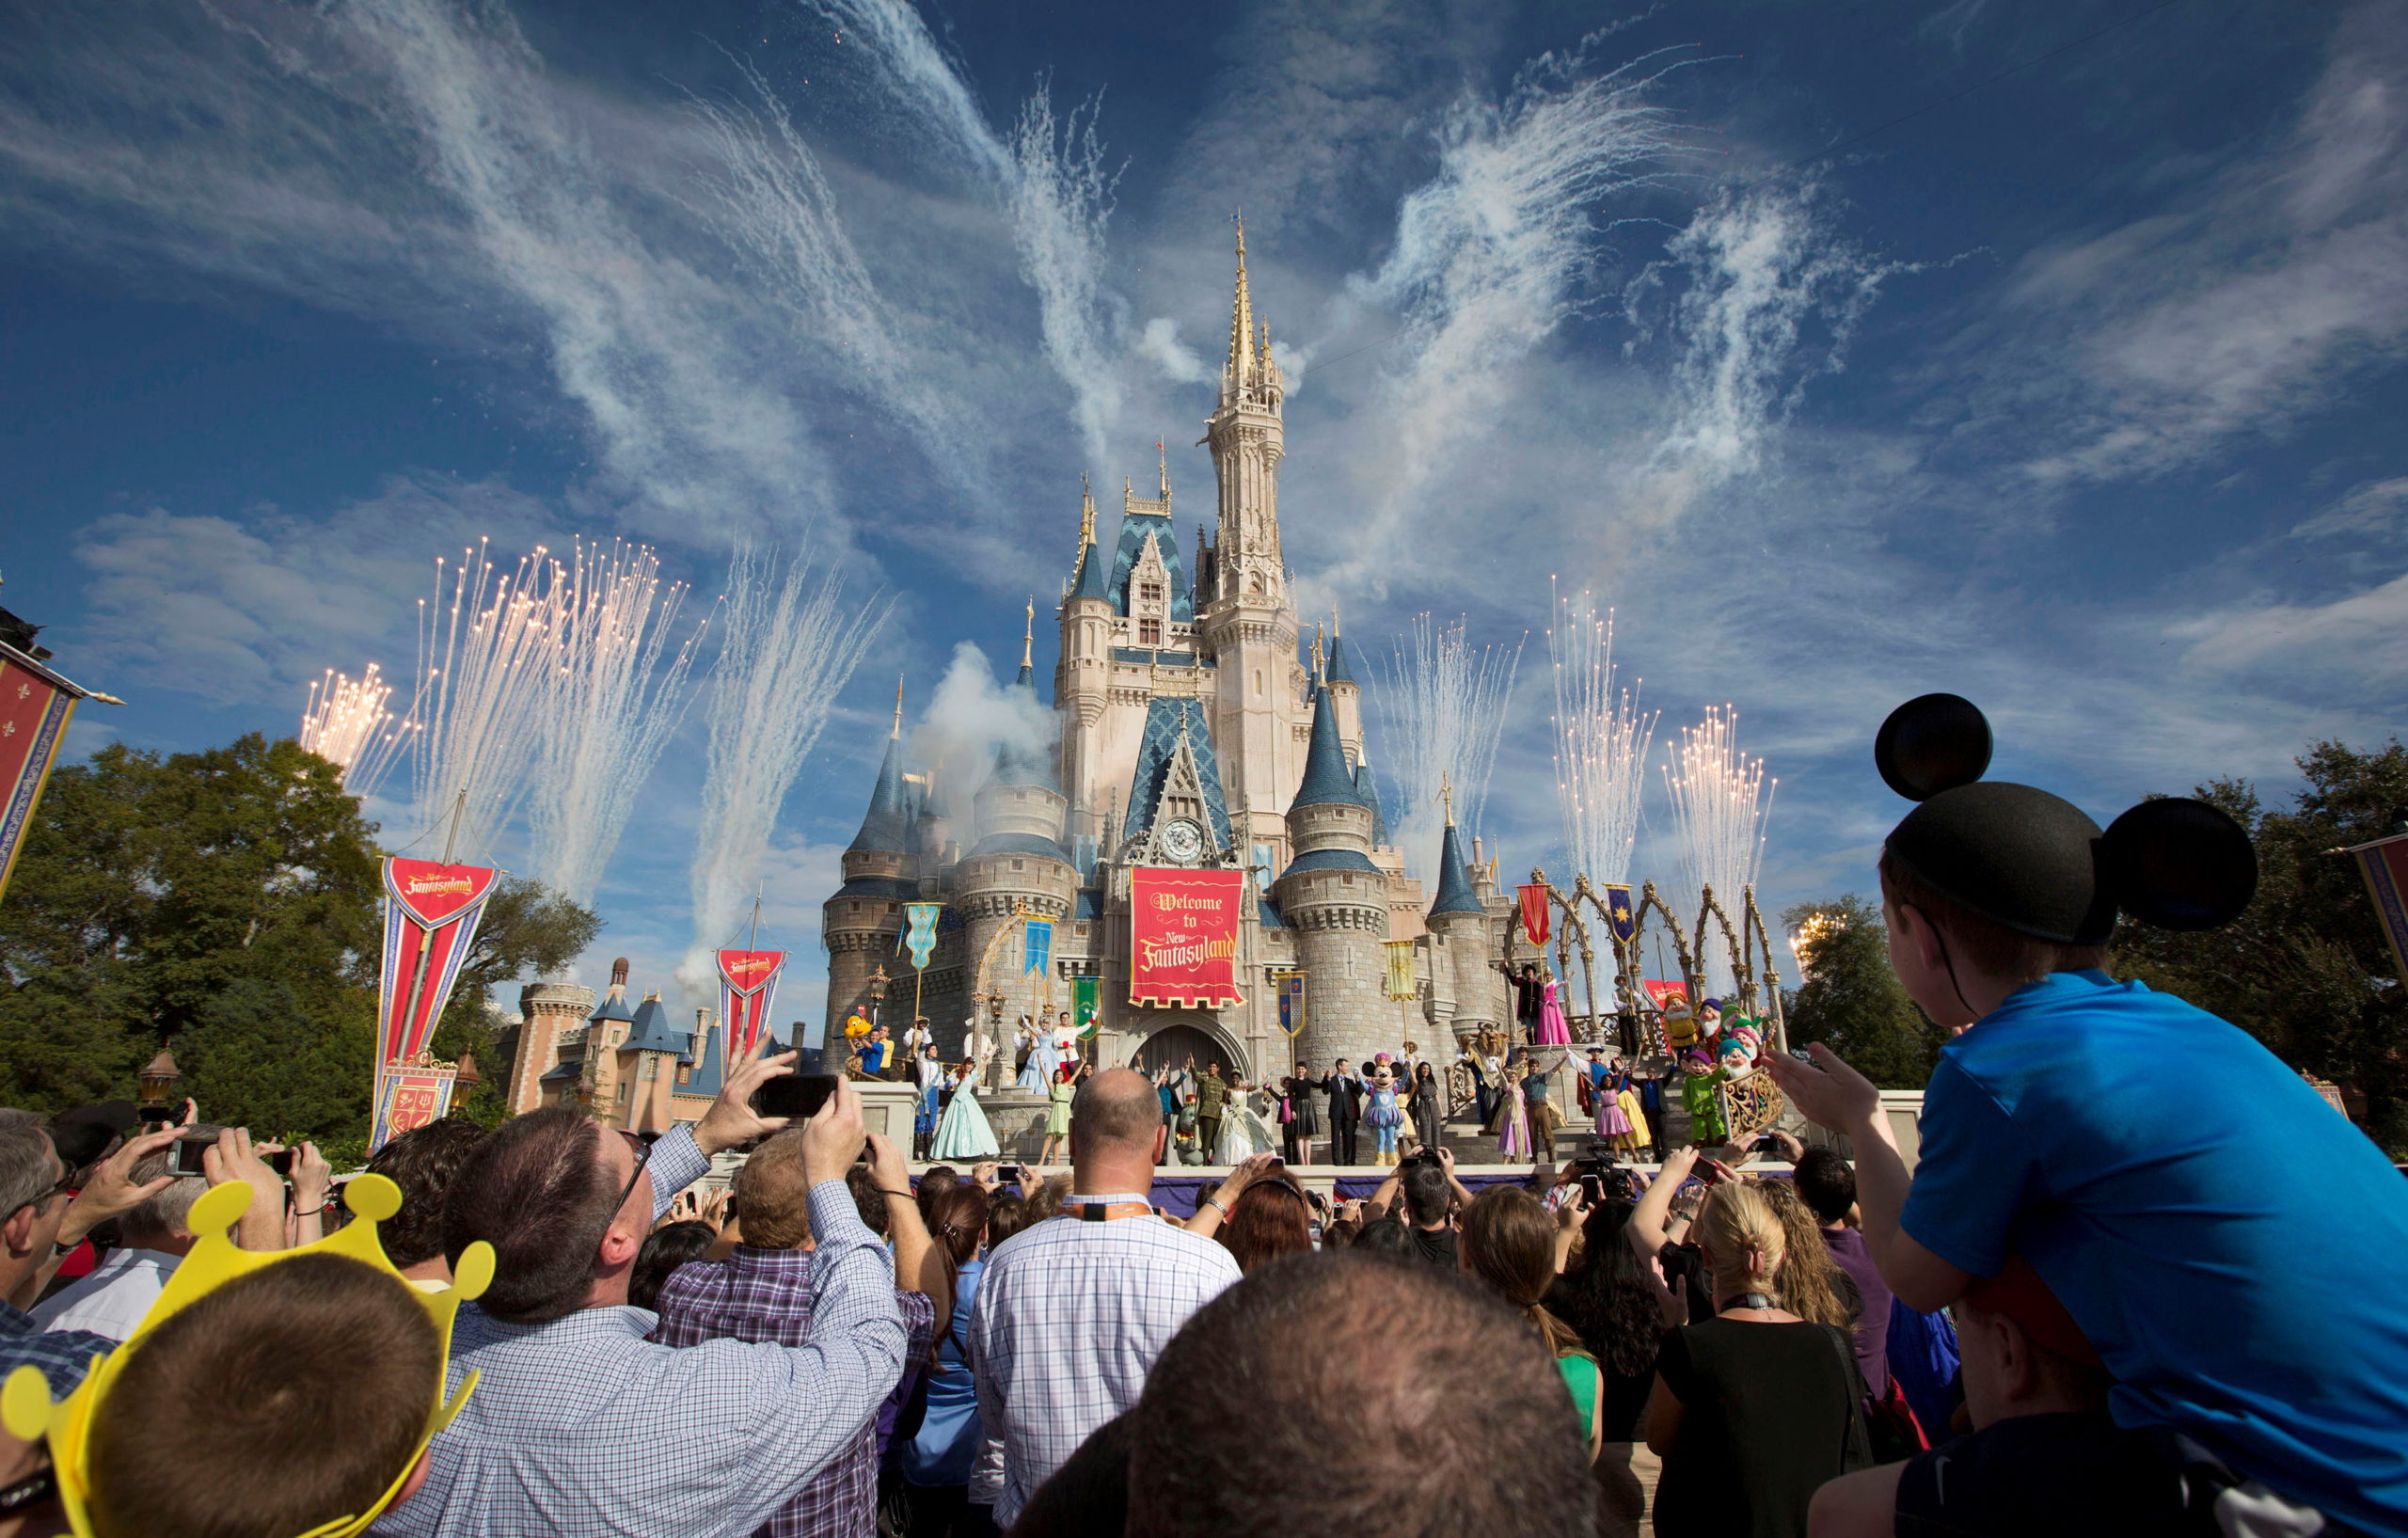 FILE PHOTO: Fireworks go off around Cinderella's castle during the grand opening ceremony for Walt Disney World's Fantasyland in Lake Buena Vista, Florida December 6, 2012. REUTERS/Scott Audette